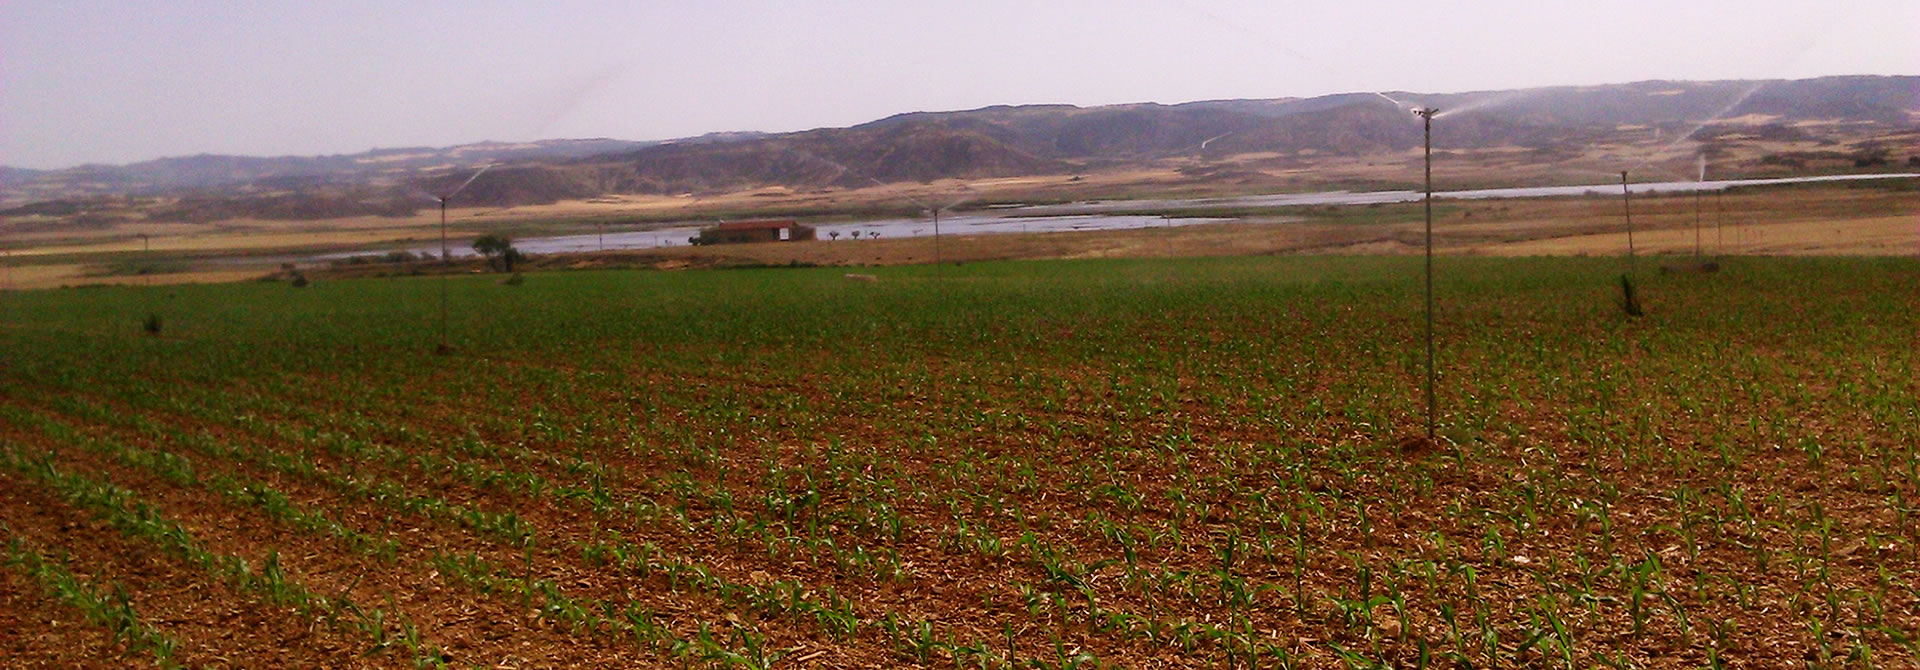 Agrovanguardia, protección de cultivos